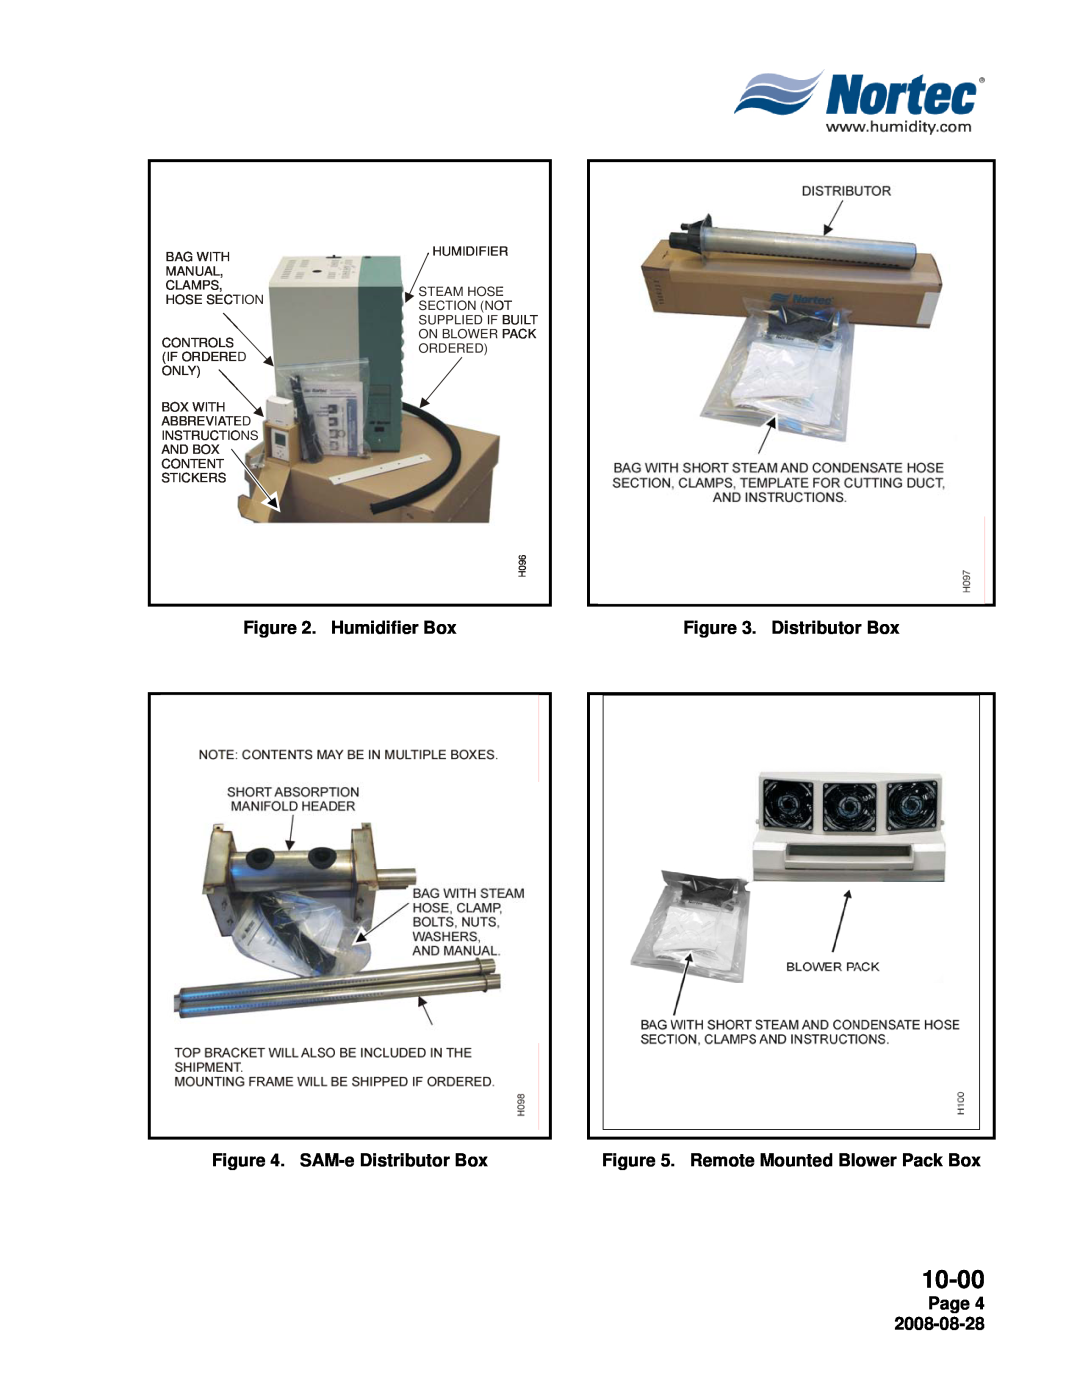 Nortec NH Series installation manual 10-00, Humidifier Box, SAM-eDistributor Box, Remote Mounted Blower Pack Box, Page 4 